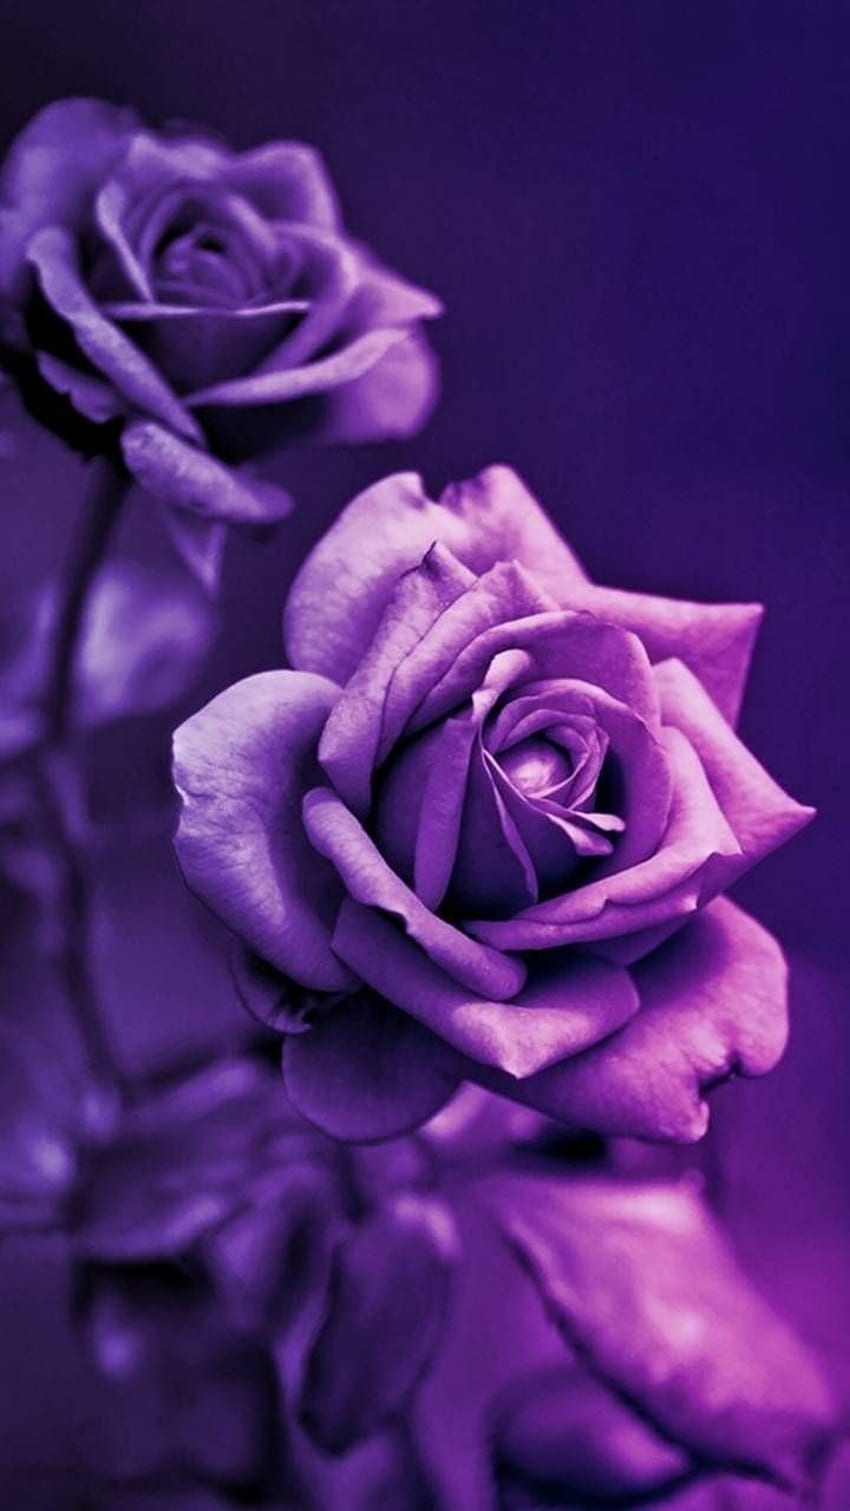 Purple Roses Background Roses in 2020. Fioletowe róże, Fioletowe kwiaty, Fioletowe róże, Lawendowa róża Tapeta na telefon HD